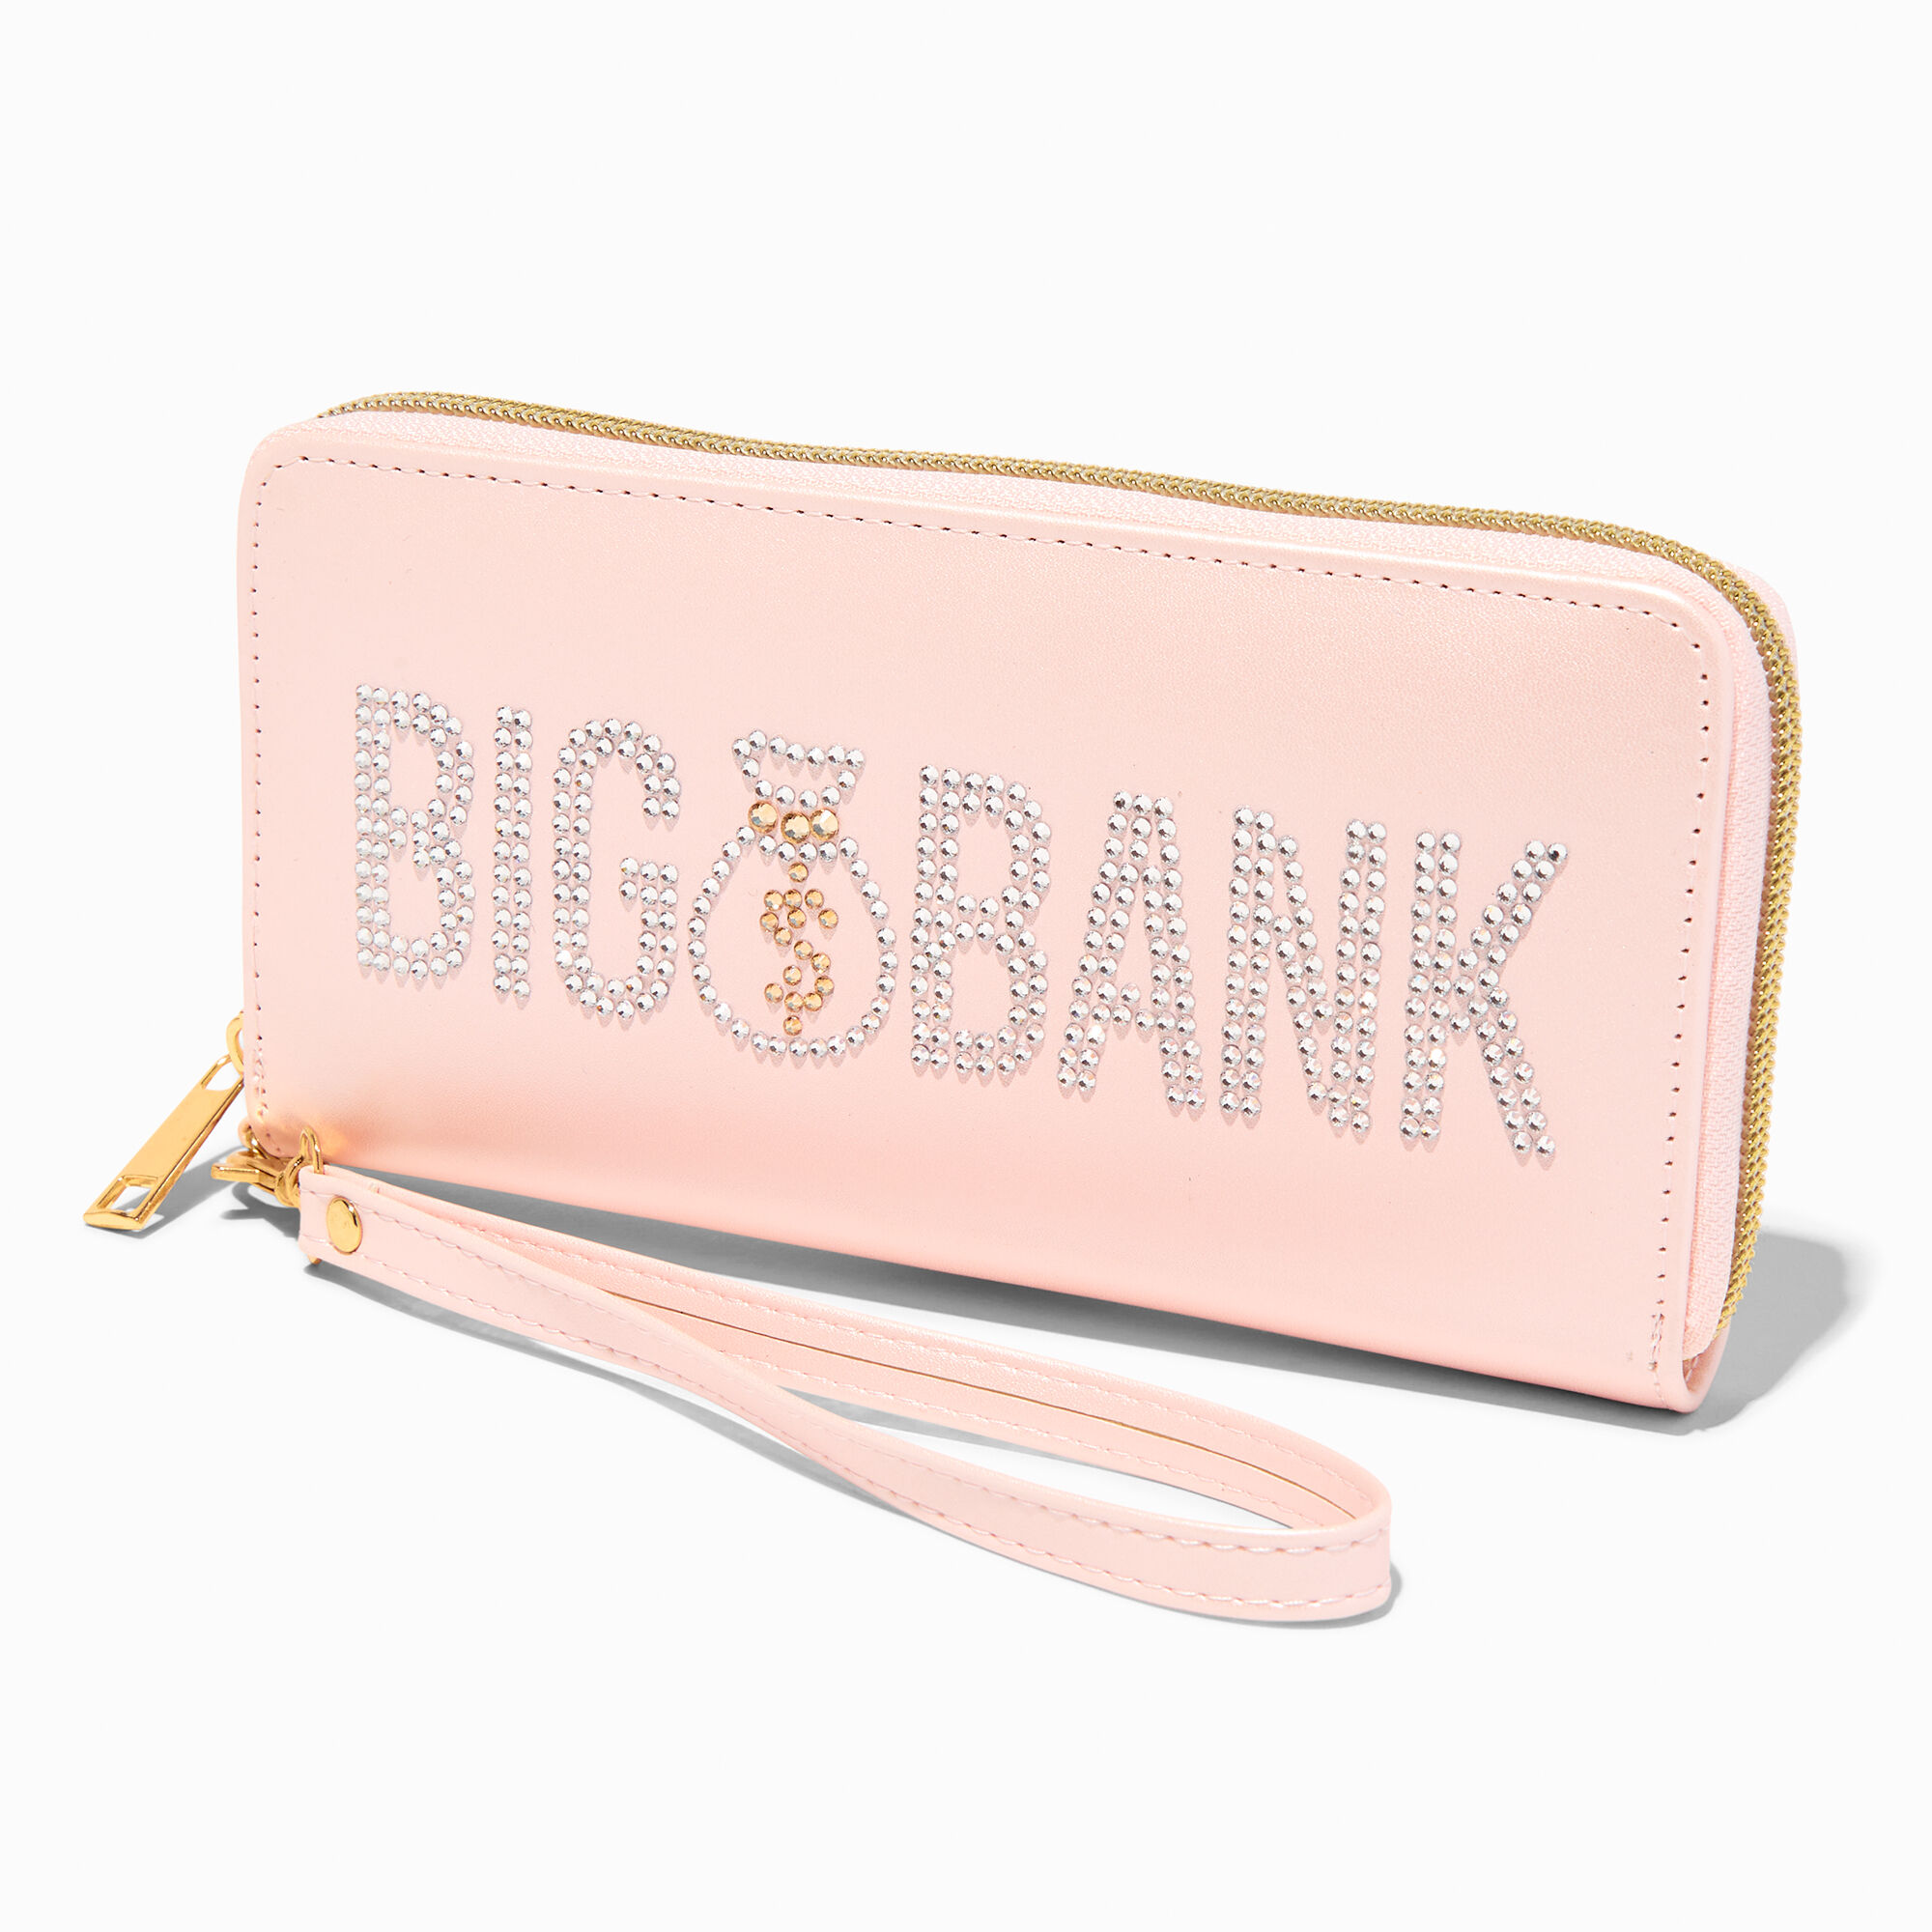 View Claires big Bank Wristlet Wallet Pink information